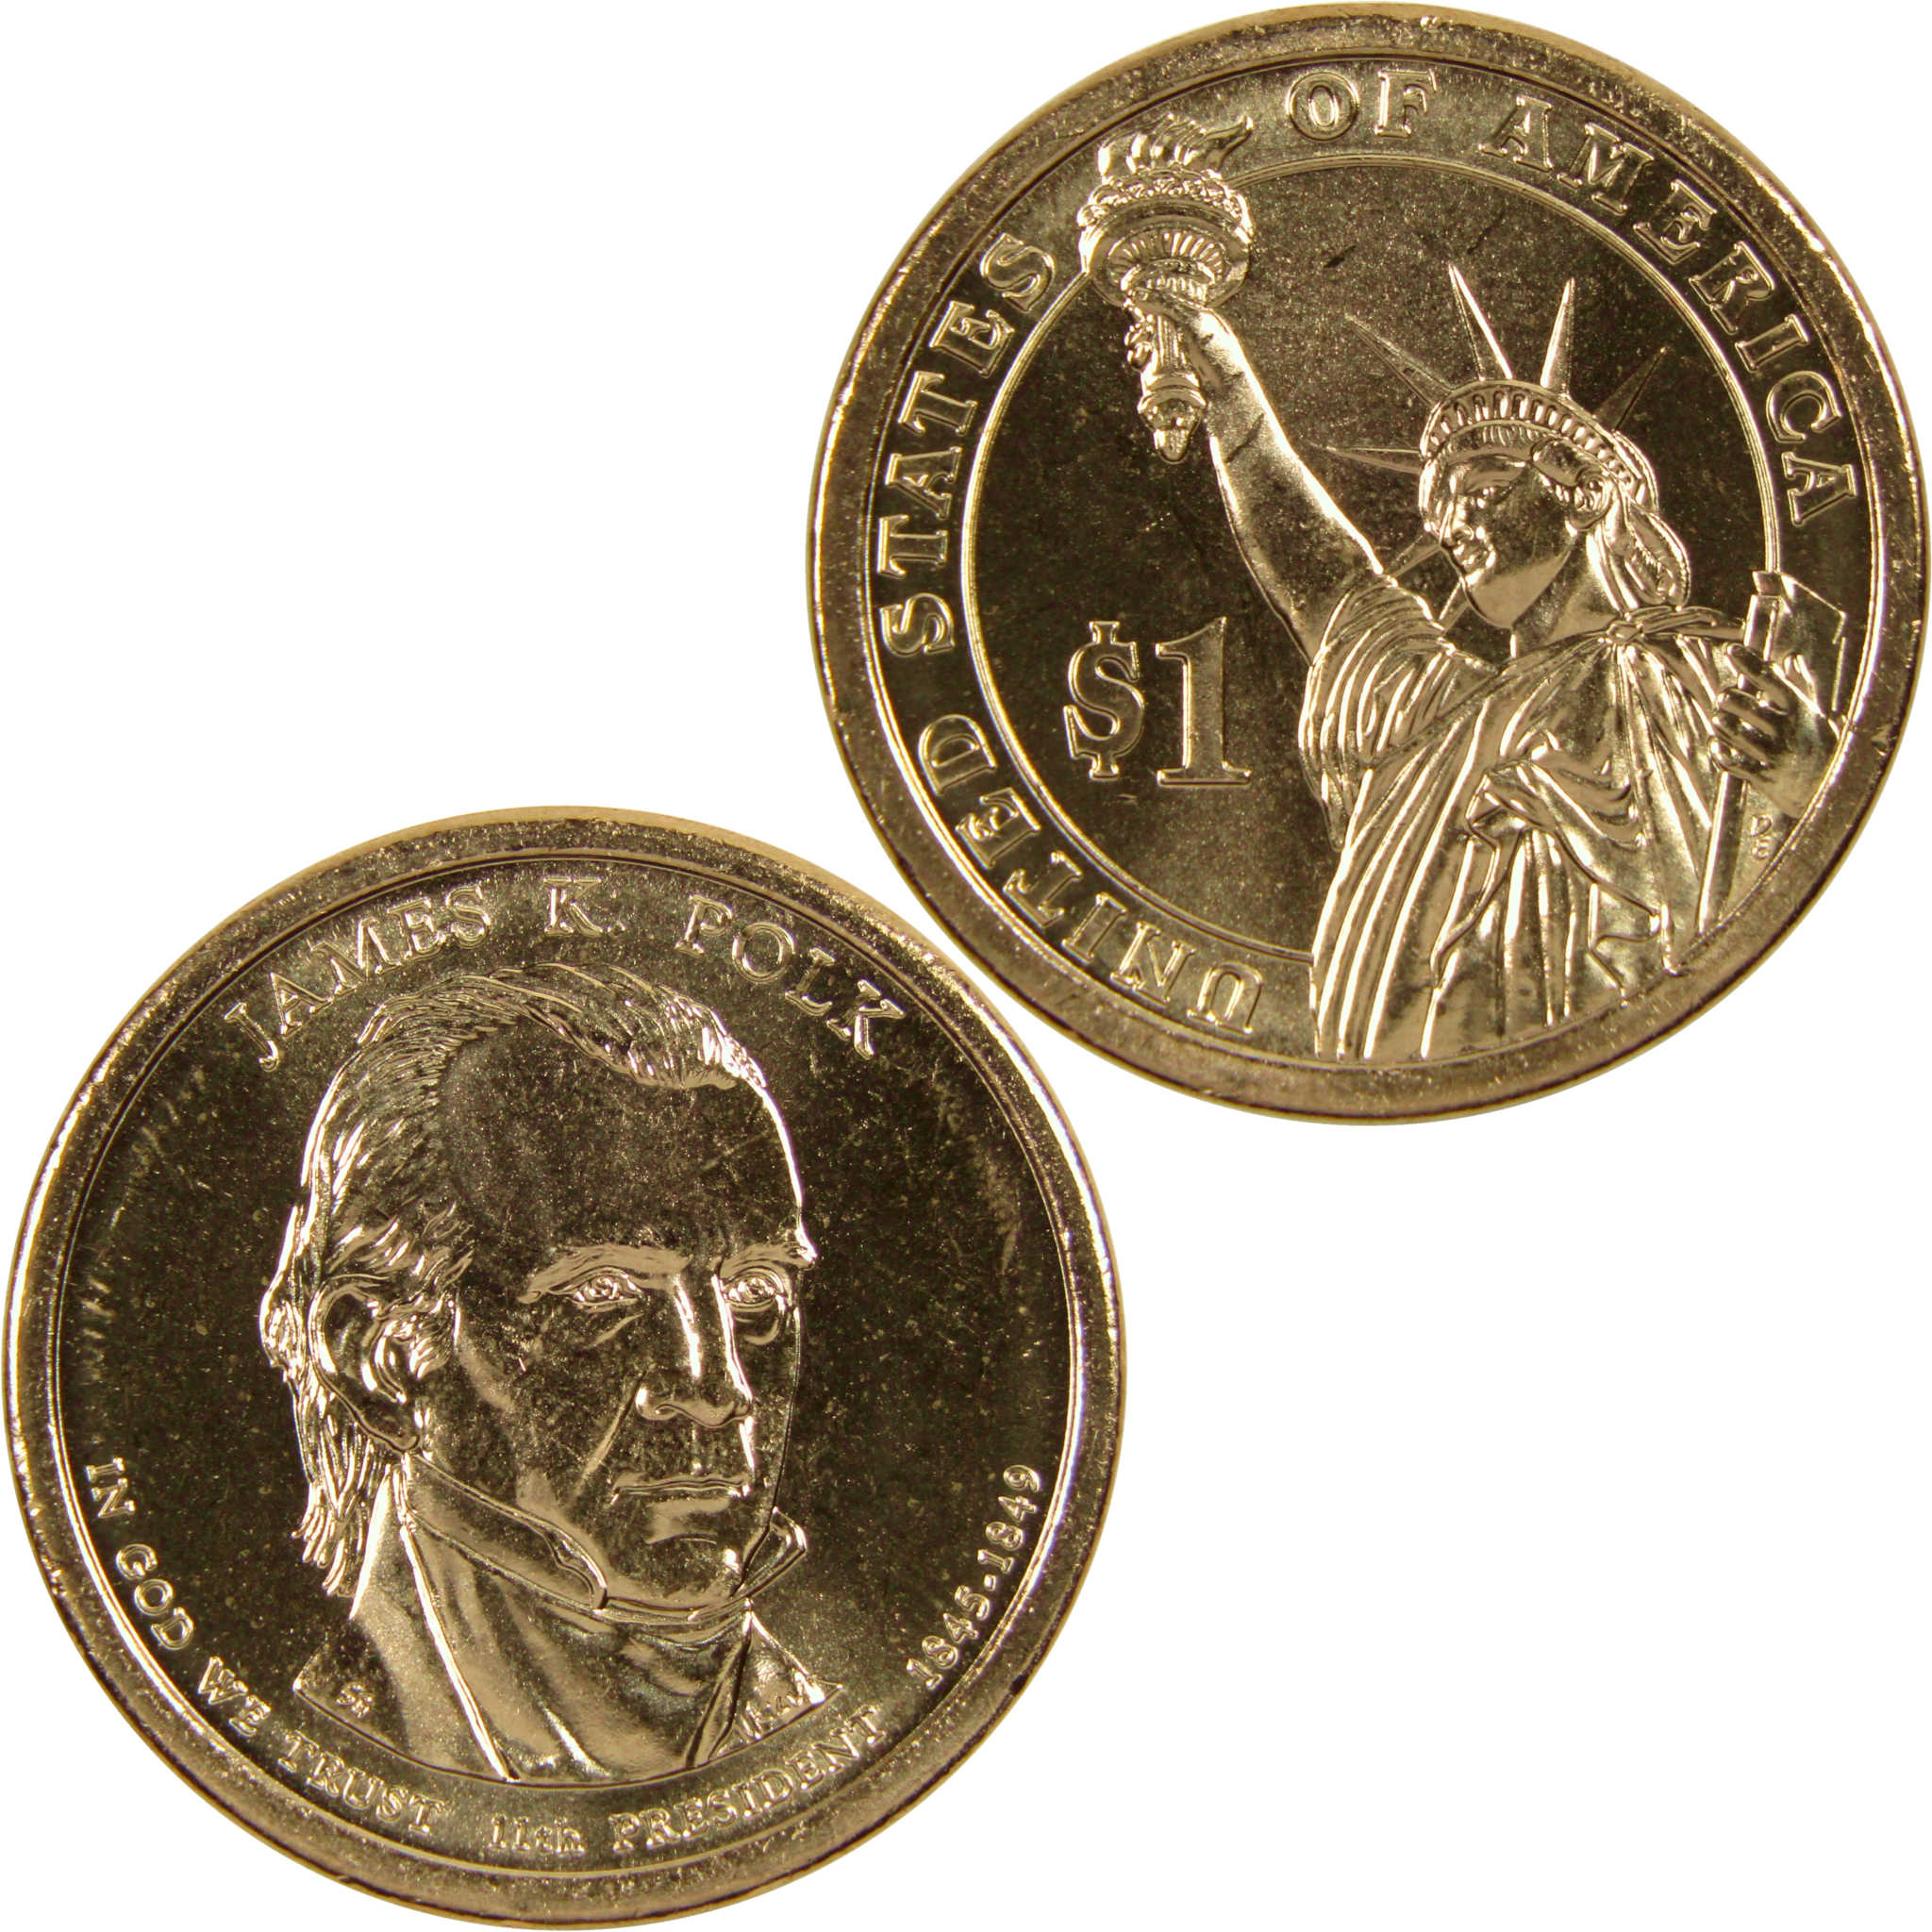 2009 P James K Polk Presidential Dollar BU Uncirculated $1 Coin